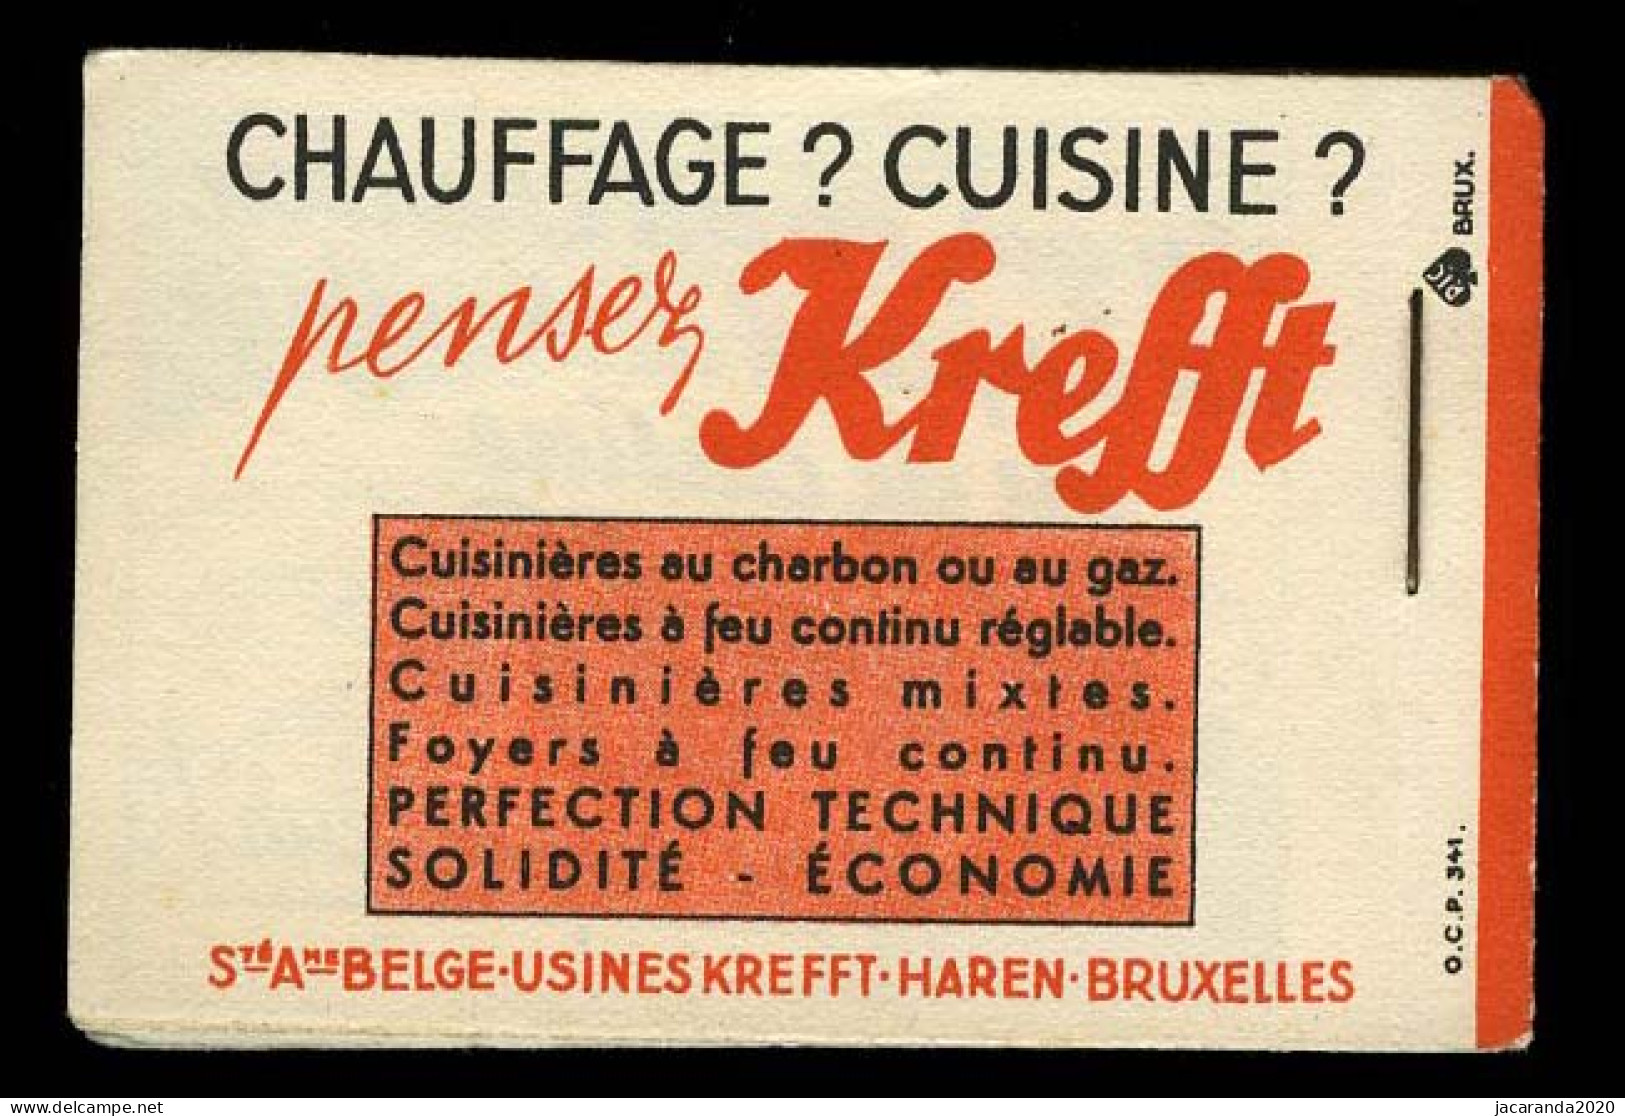 België A35a - Boekje "Une Pêche Miraculeuse" - "Krefft" - 1941 - Rode Rugband - 1907-1941 Anciens [A]